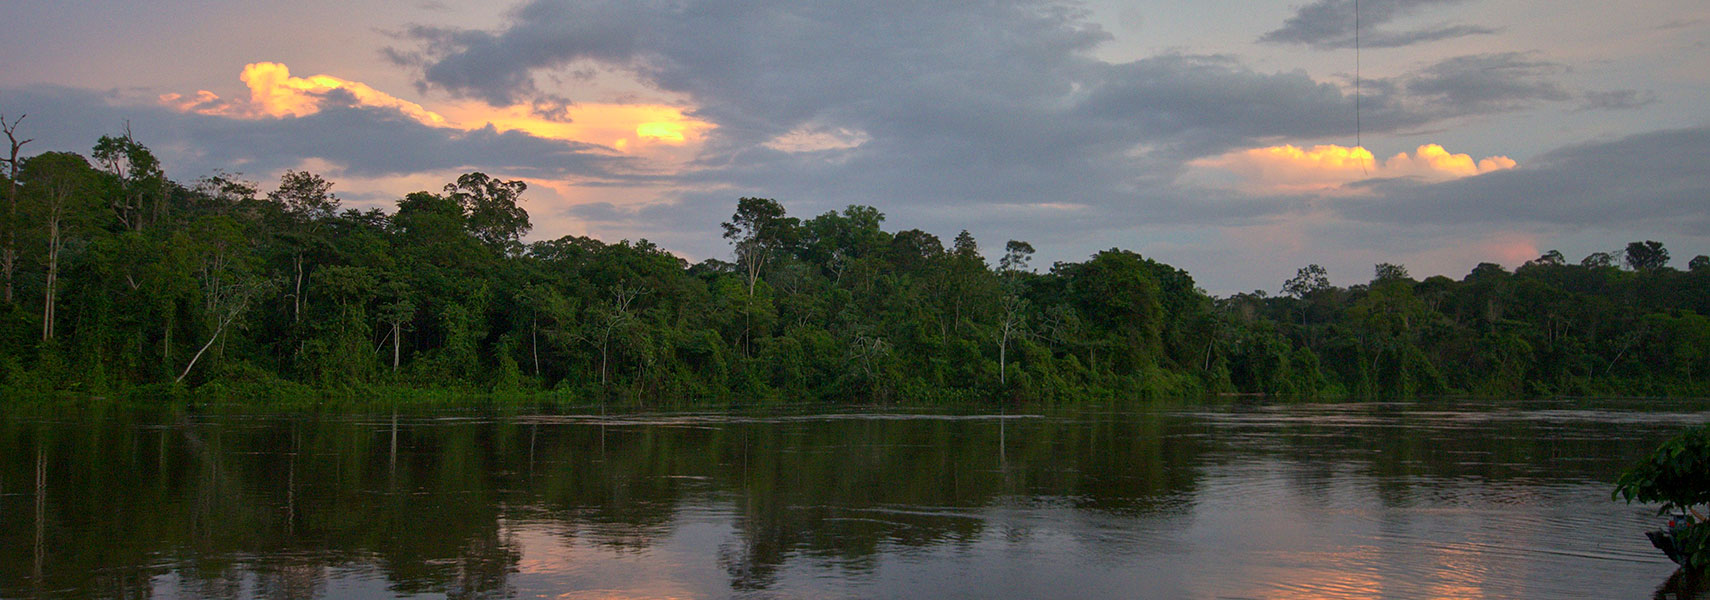 Tapanahony River, near Palumeu airport, Sipaliwini District, Suriname